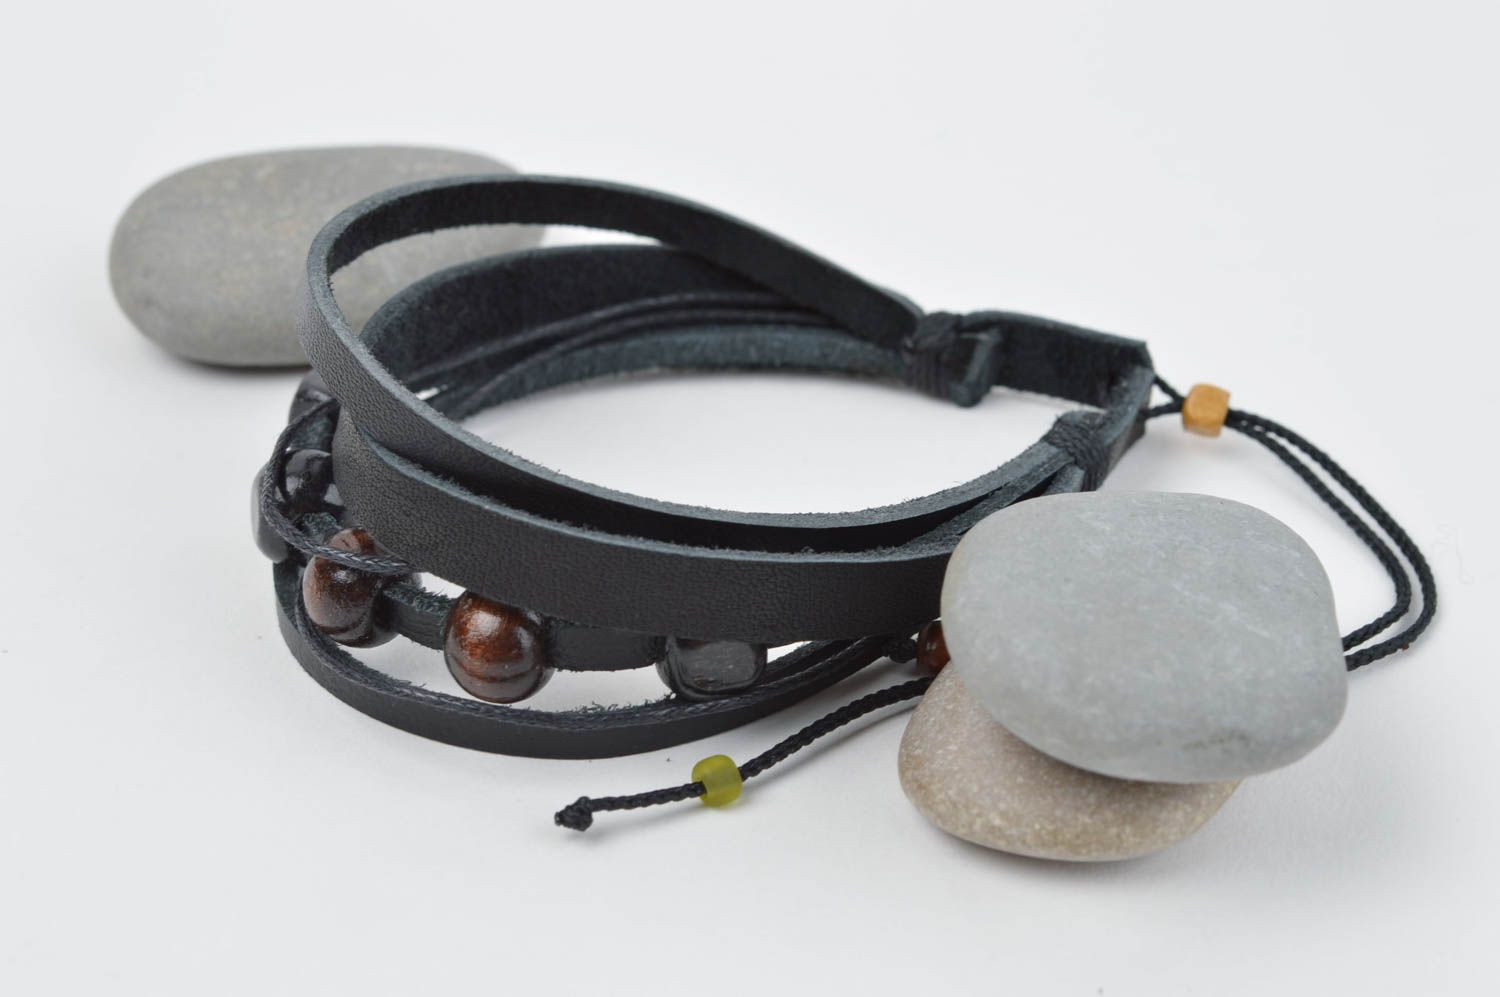 Stylish handmade leather bracelet wrist bracelet designs leather goods photo 1